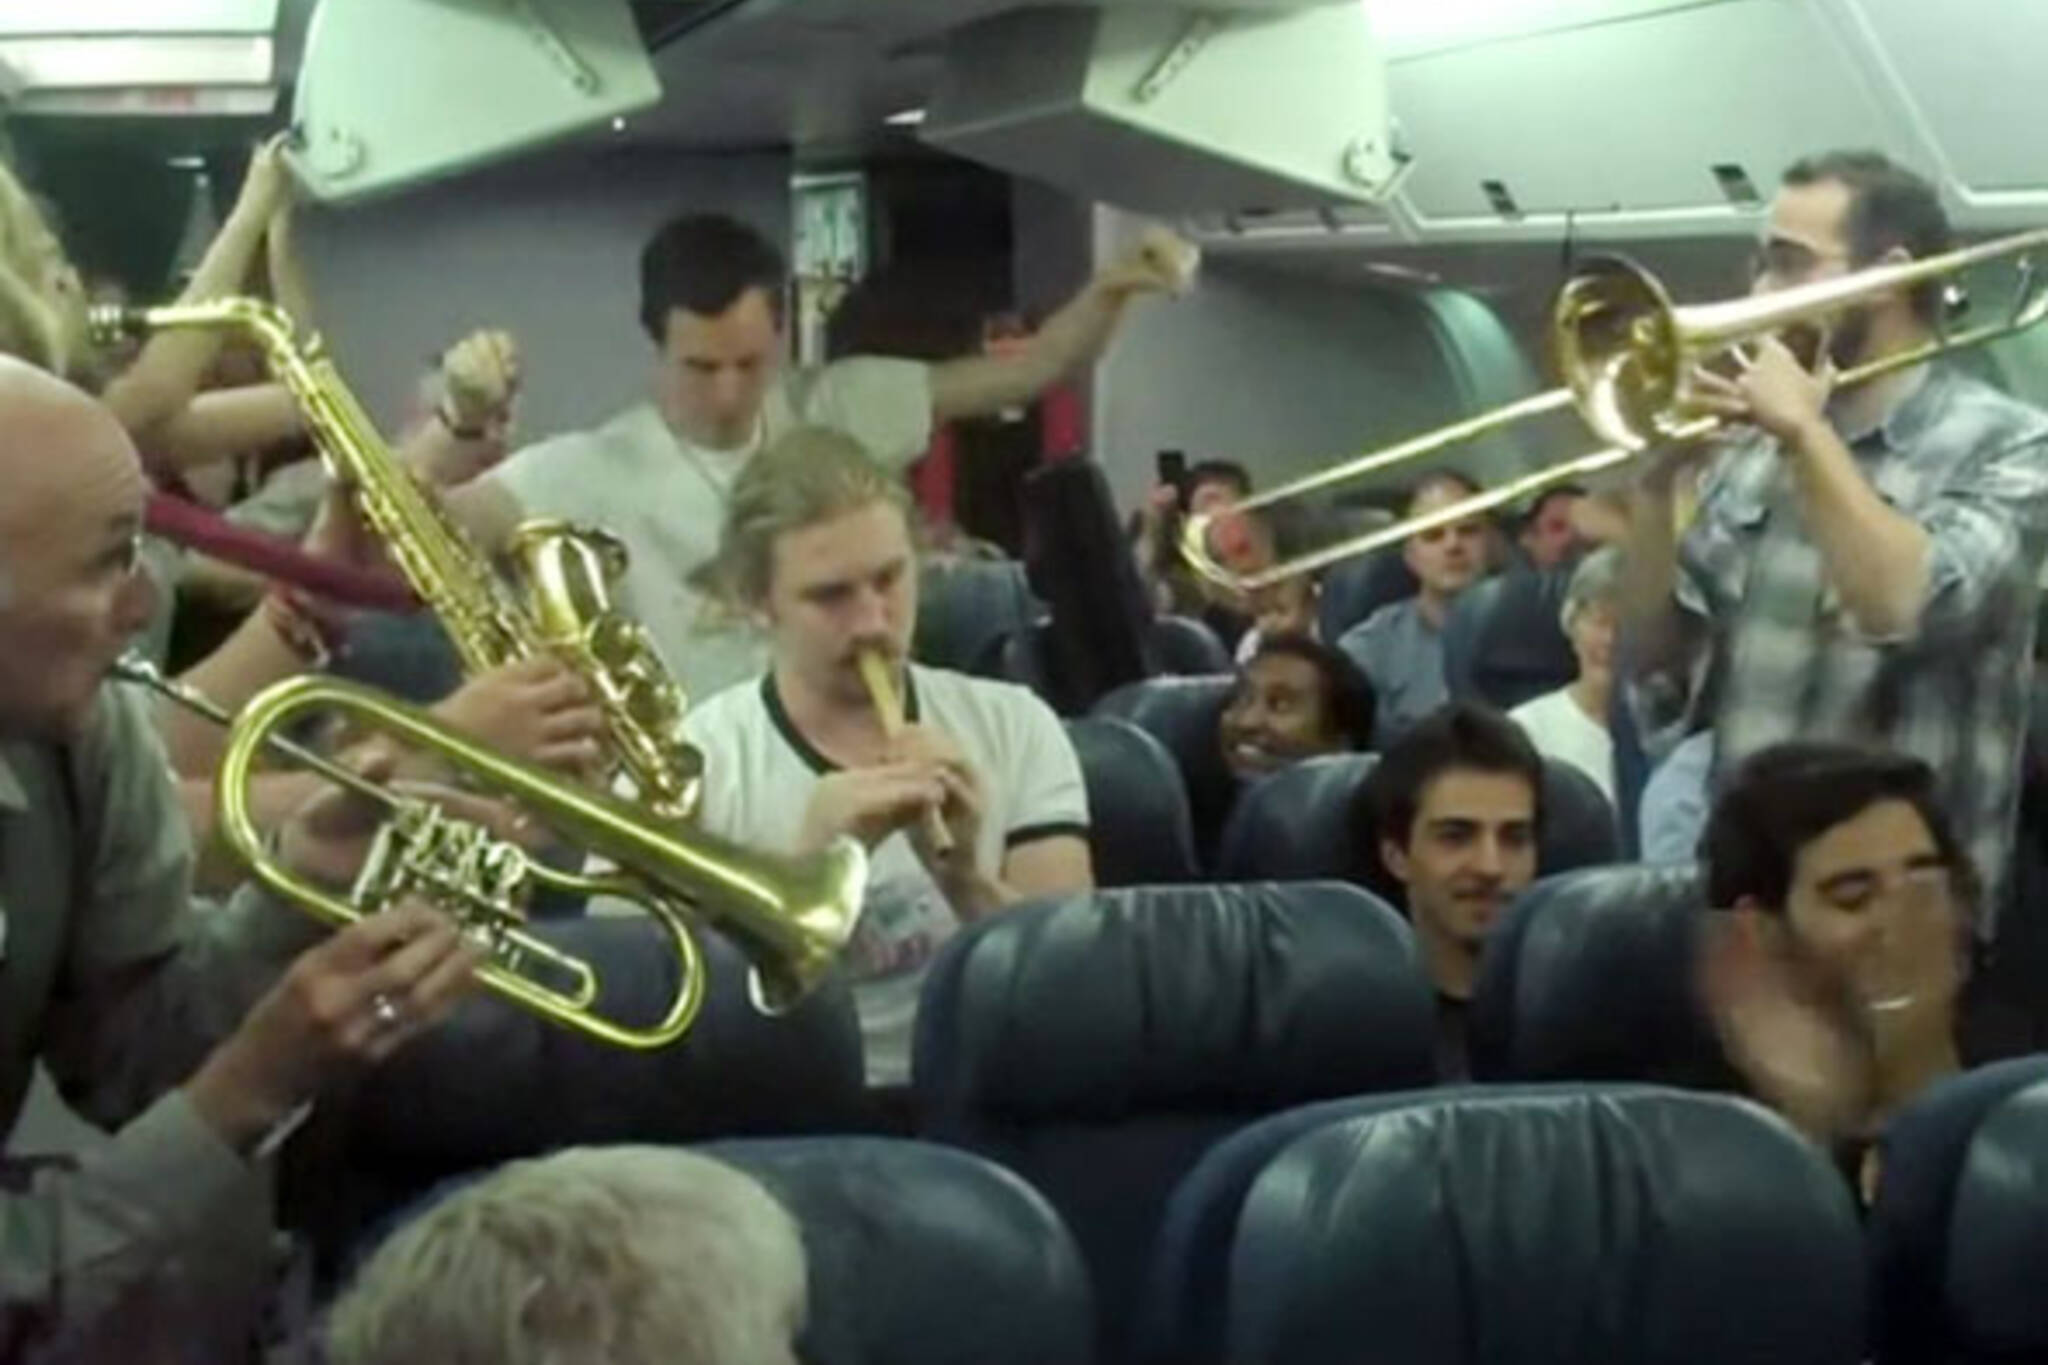 Music on a plane